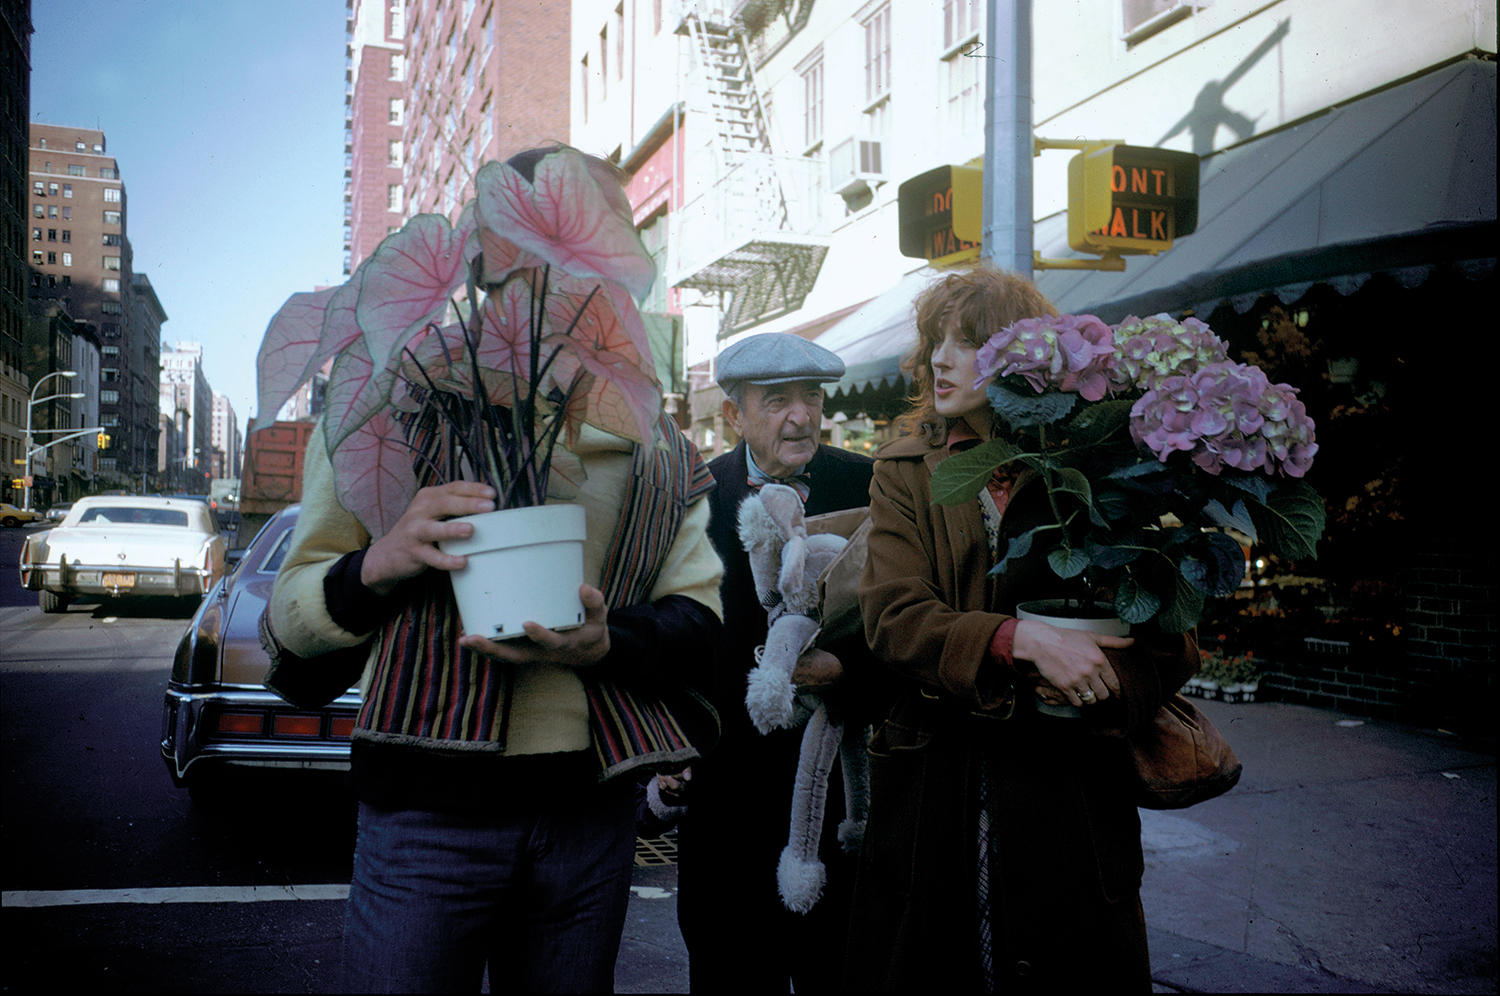 Joel Meyerowitz on making photographs in the street